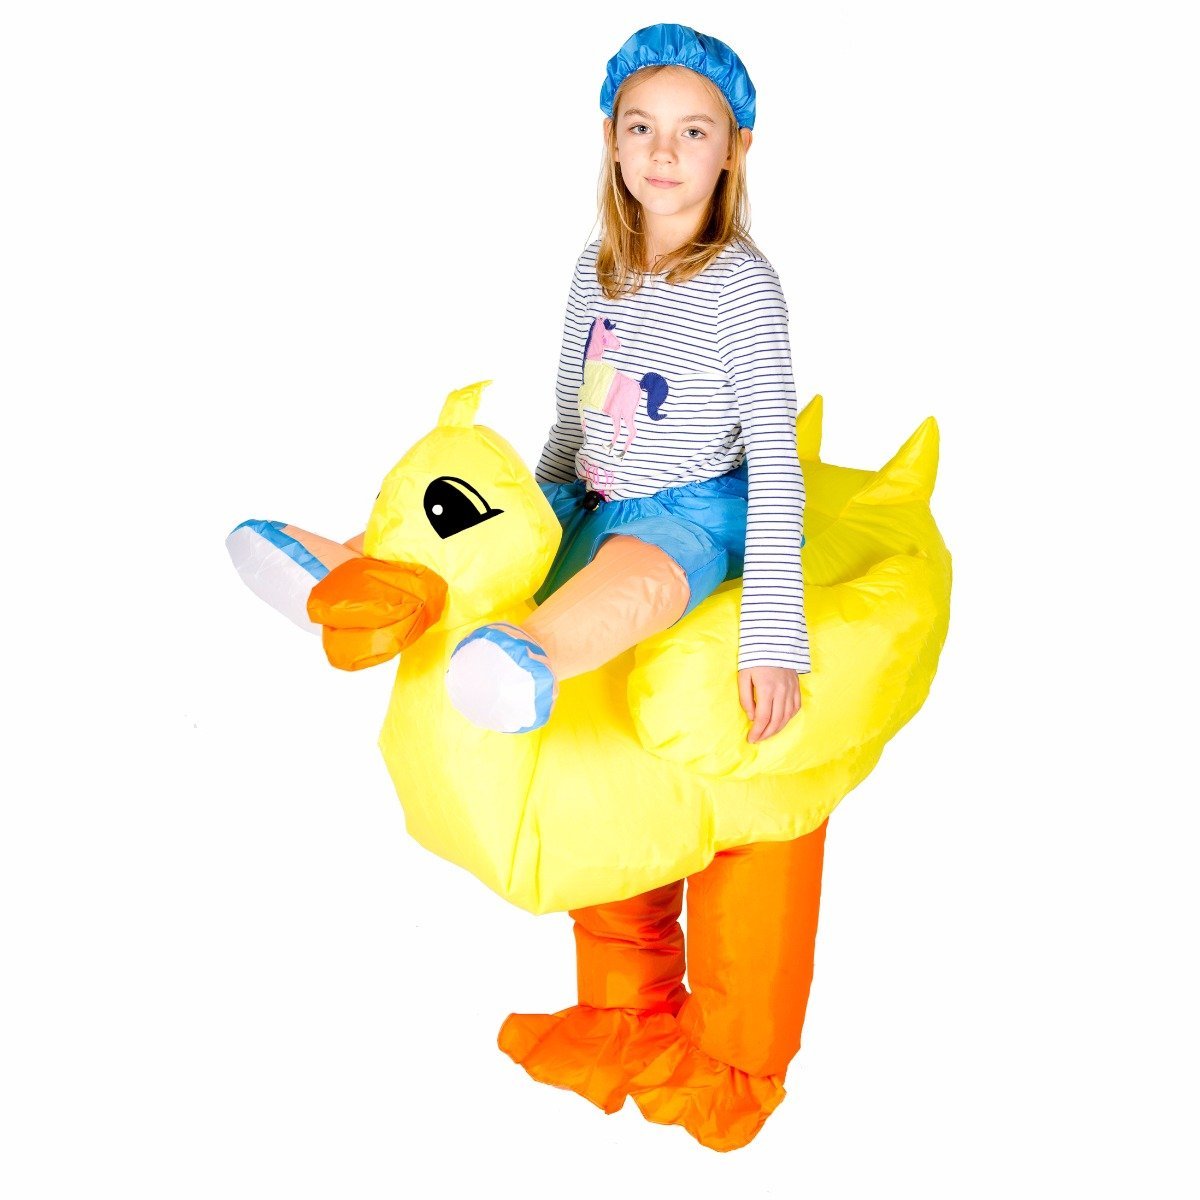 Bodysocks - Kids Inflatable Duck Costume